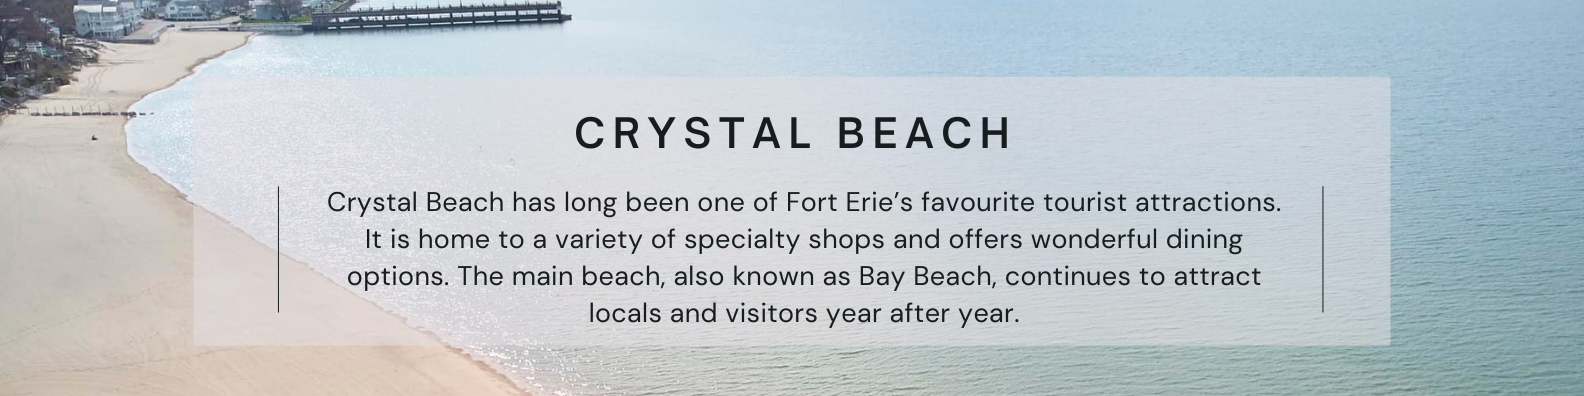 crystal beach district description